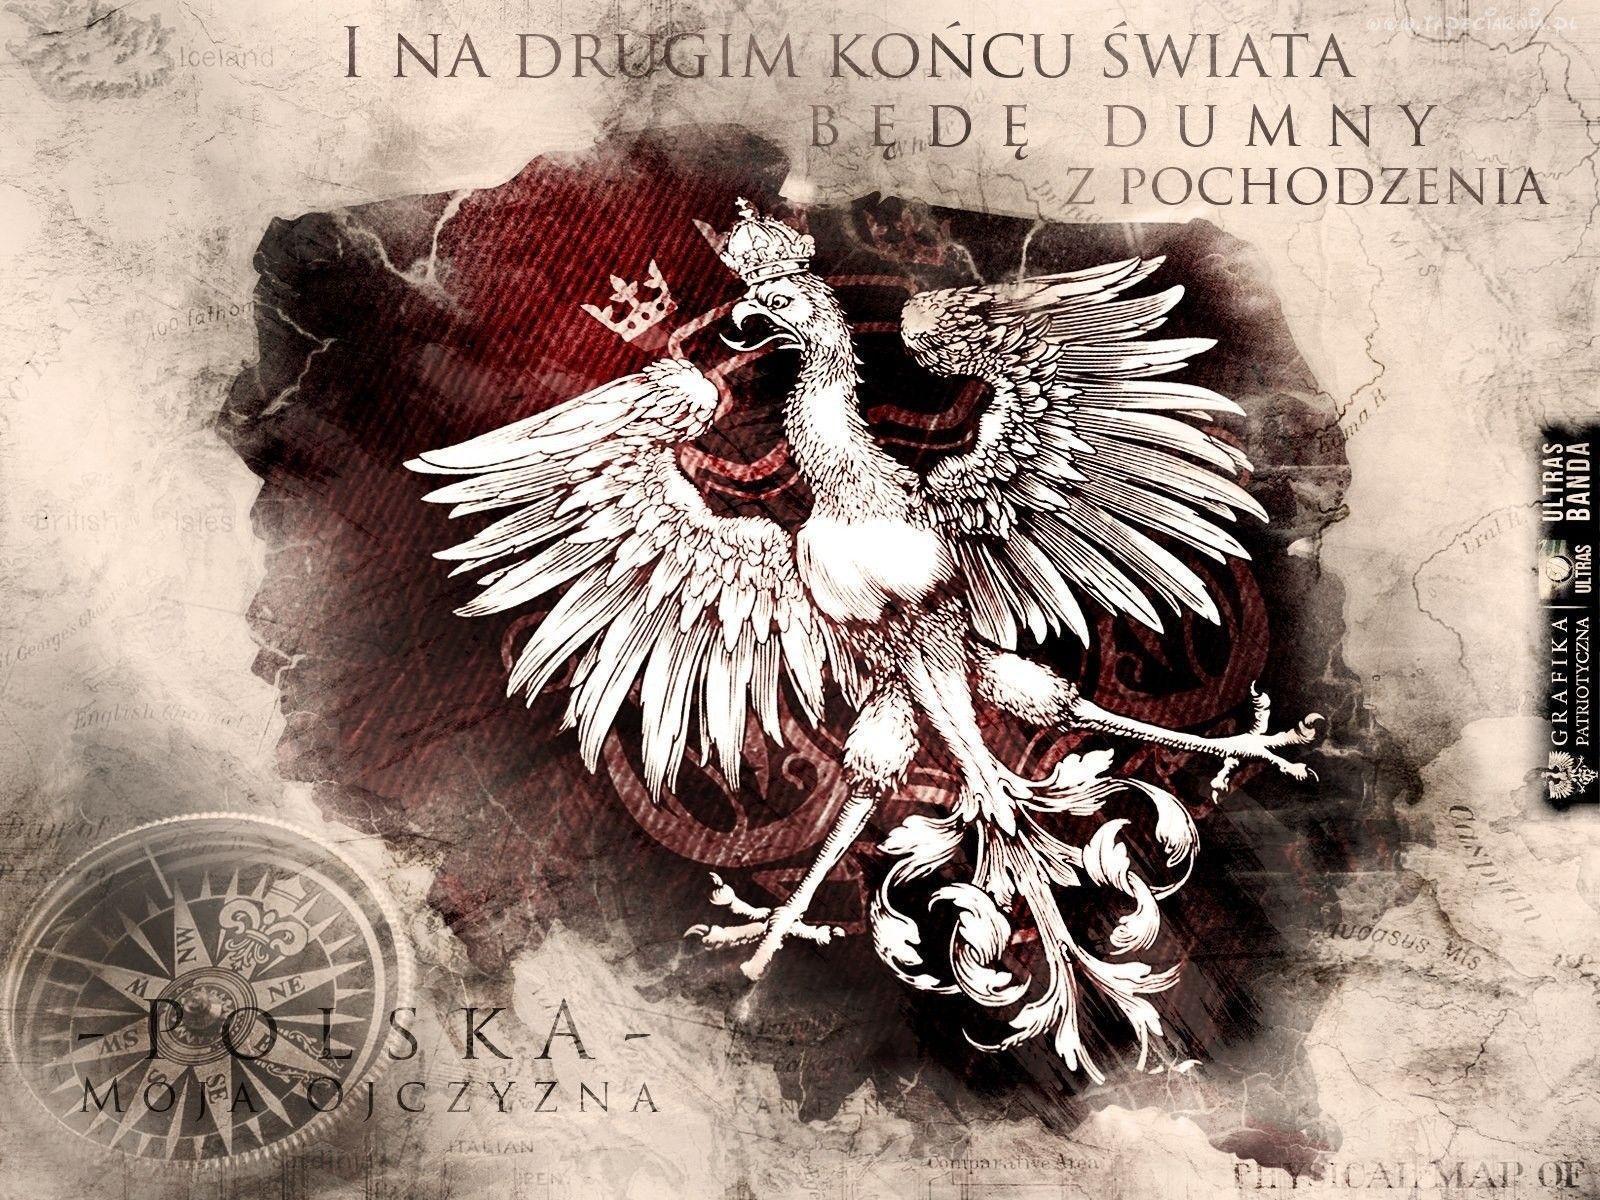 Polska i Orzeł. Polska i symbole